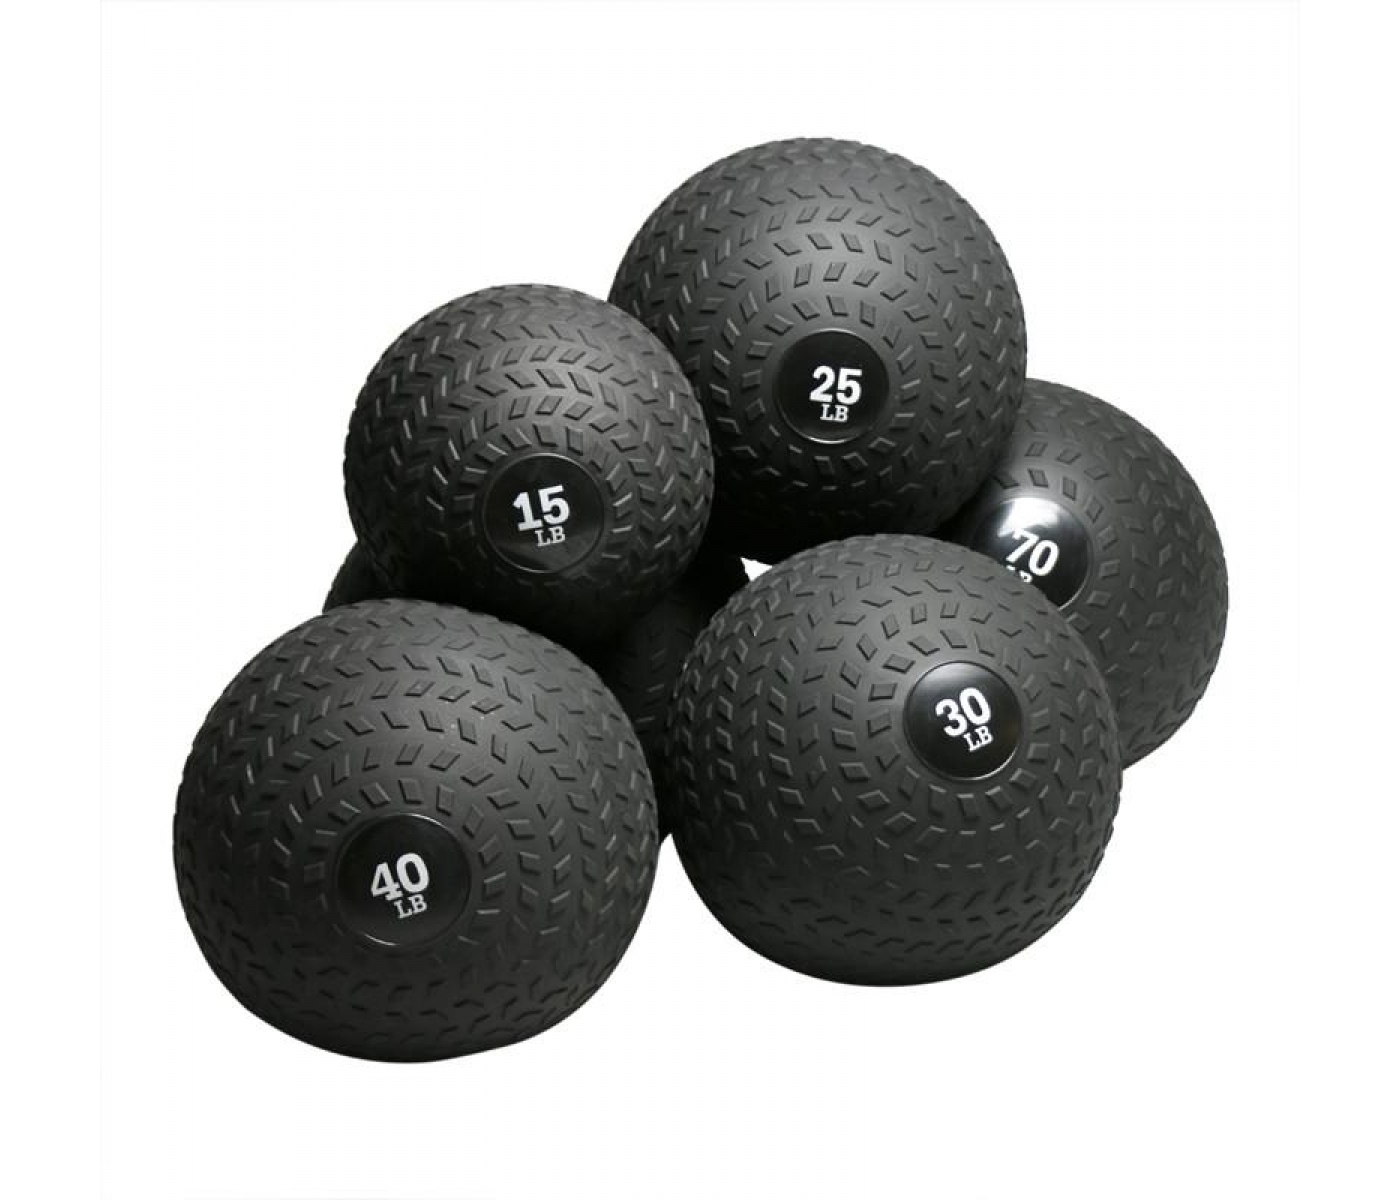 American Barbell Slam Ball 120 LBS (54,4 kg)